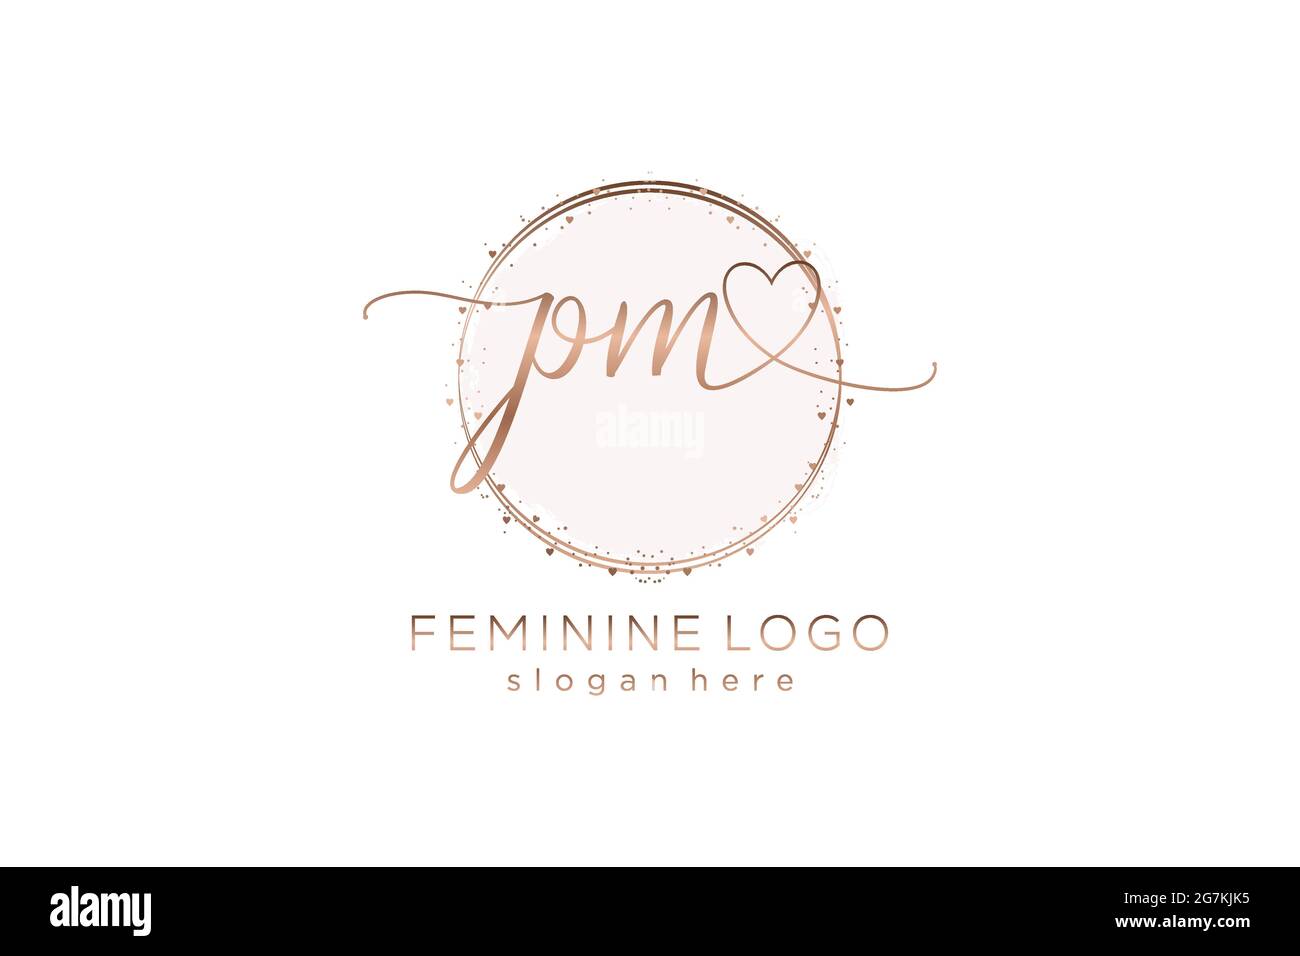 Pm initials letter wedding monogram logos Vector Image